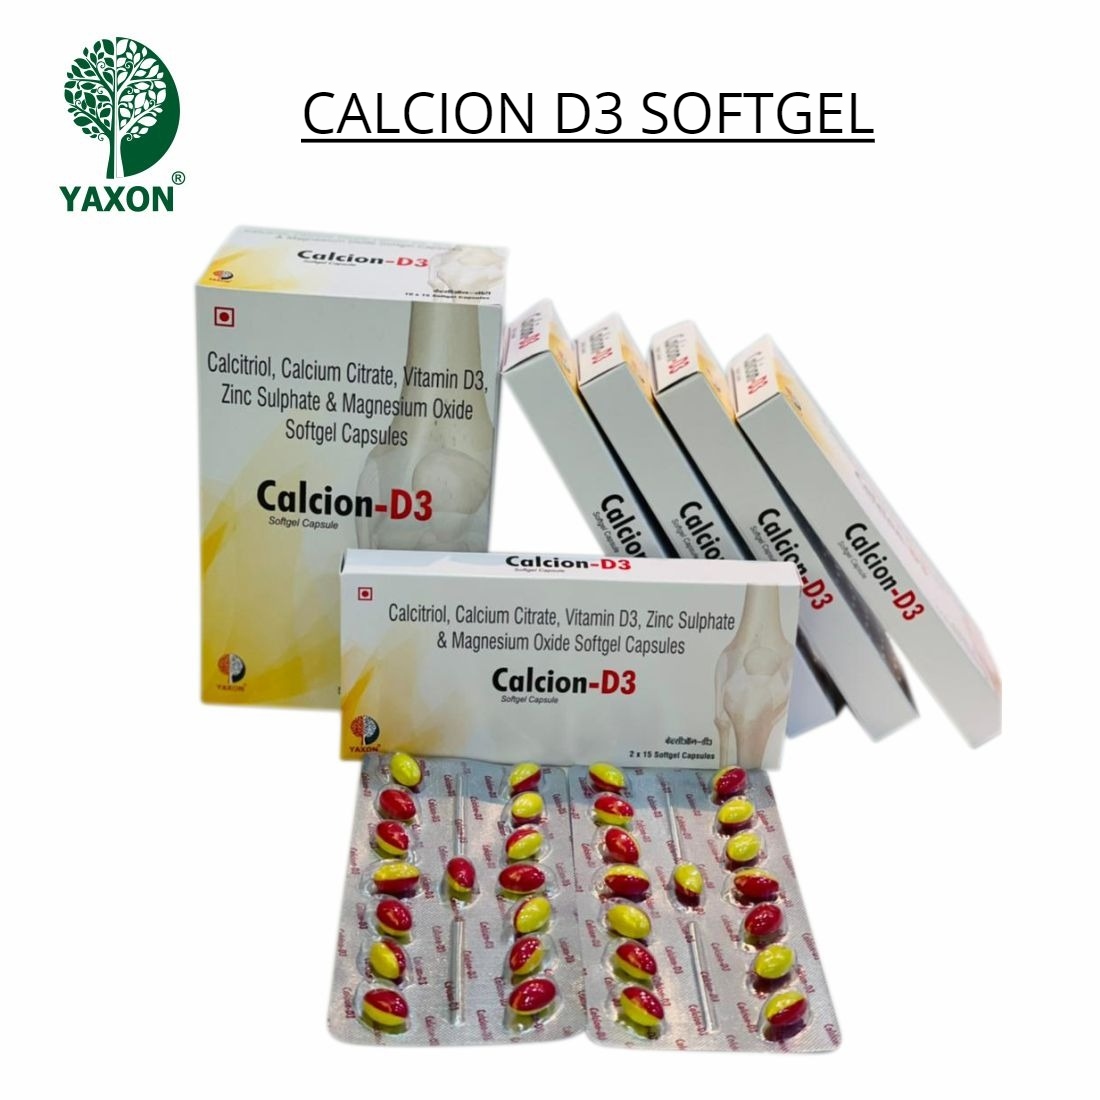 YAXON CALCION D3 Softgel Capsules